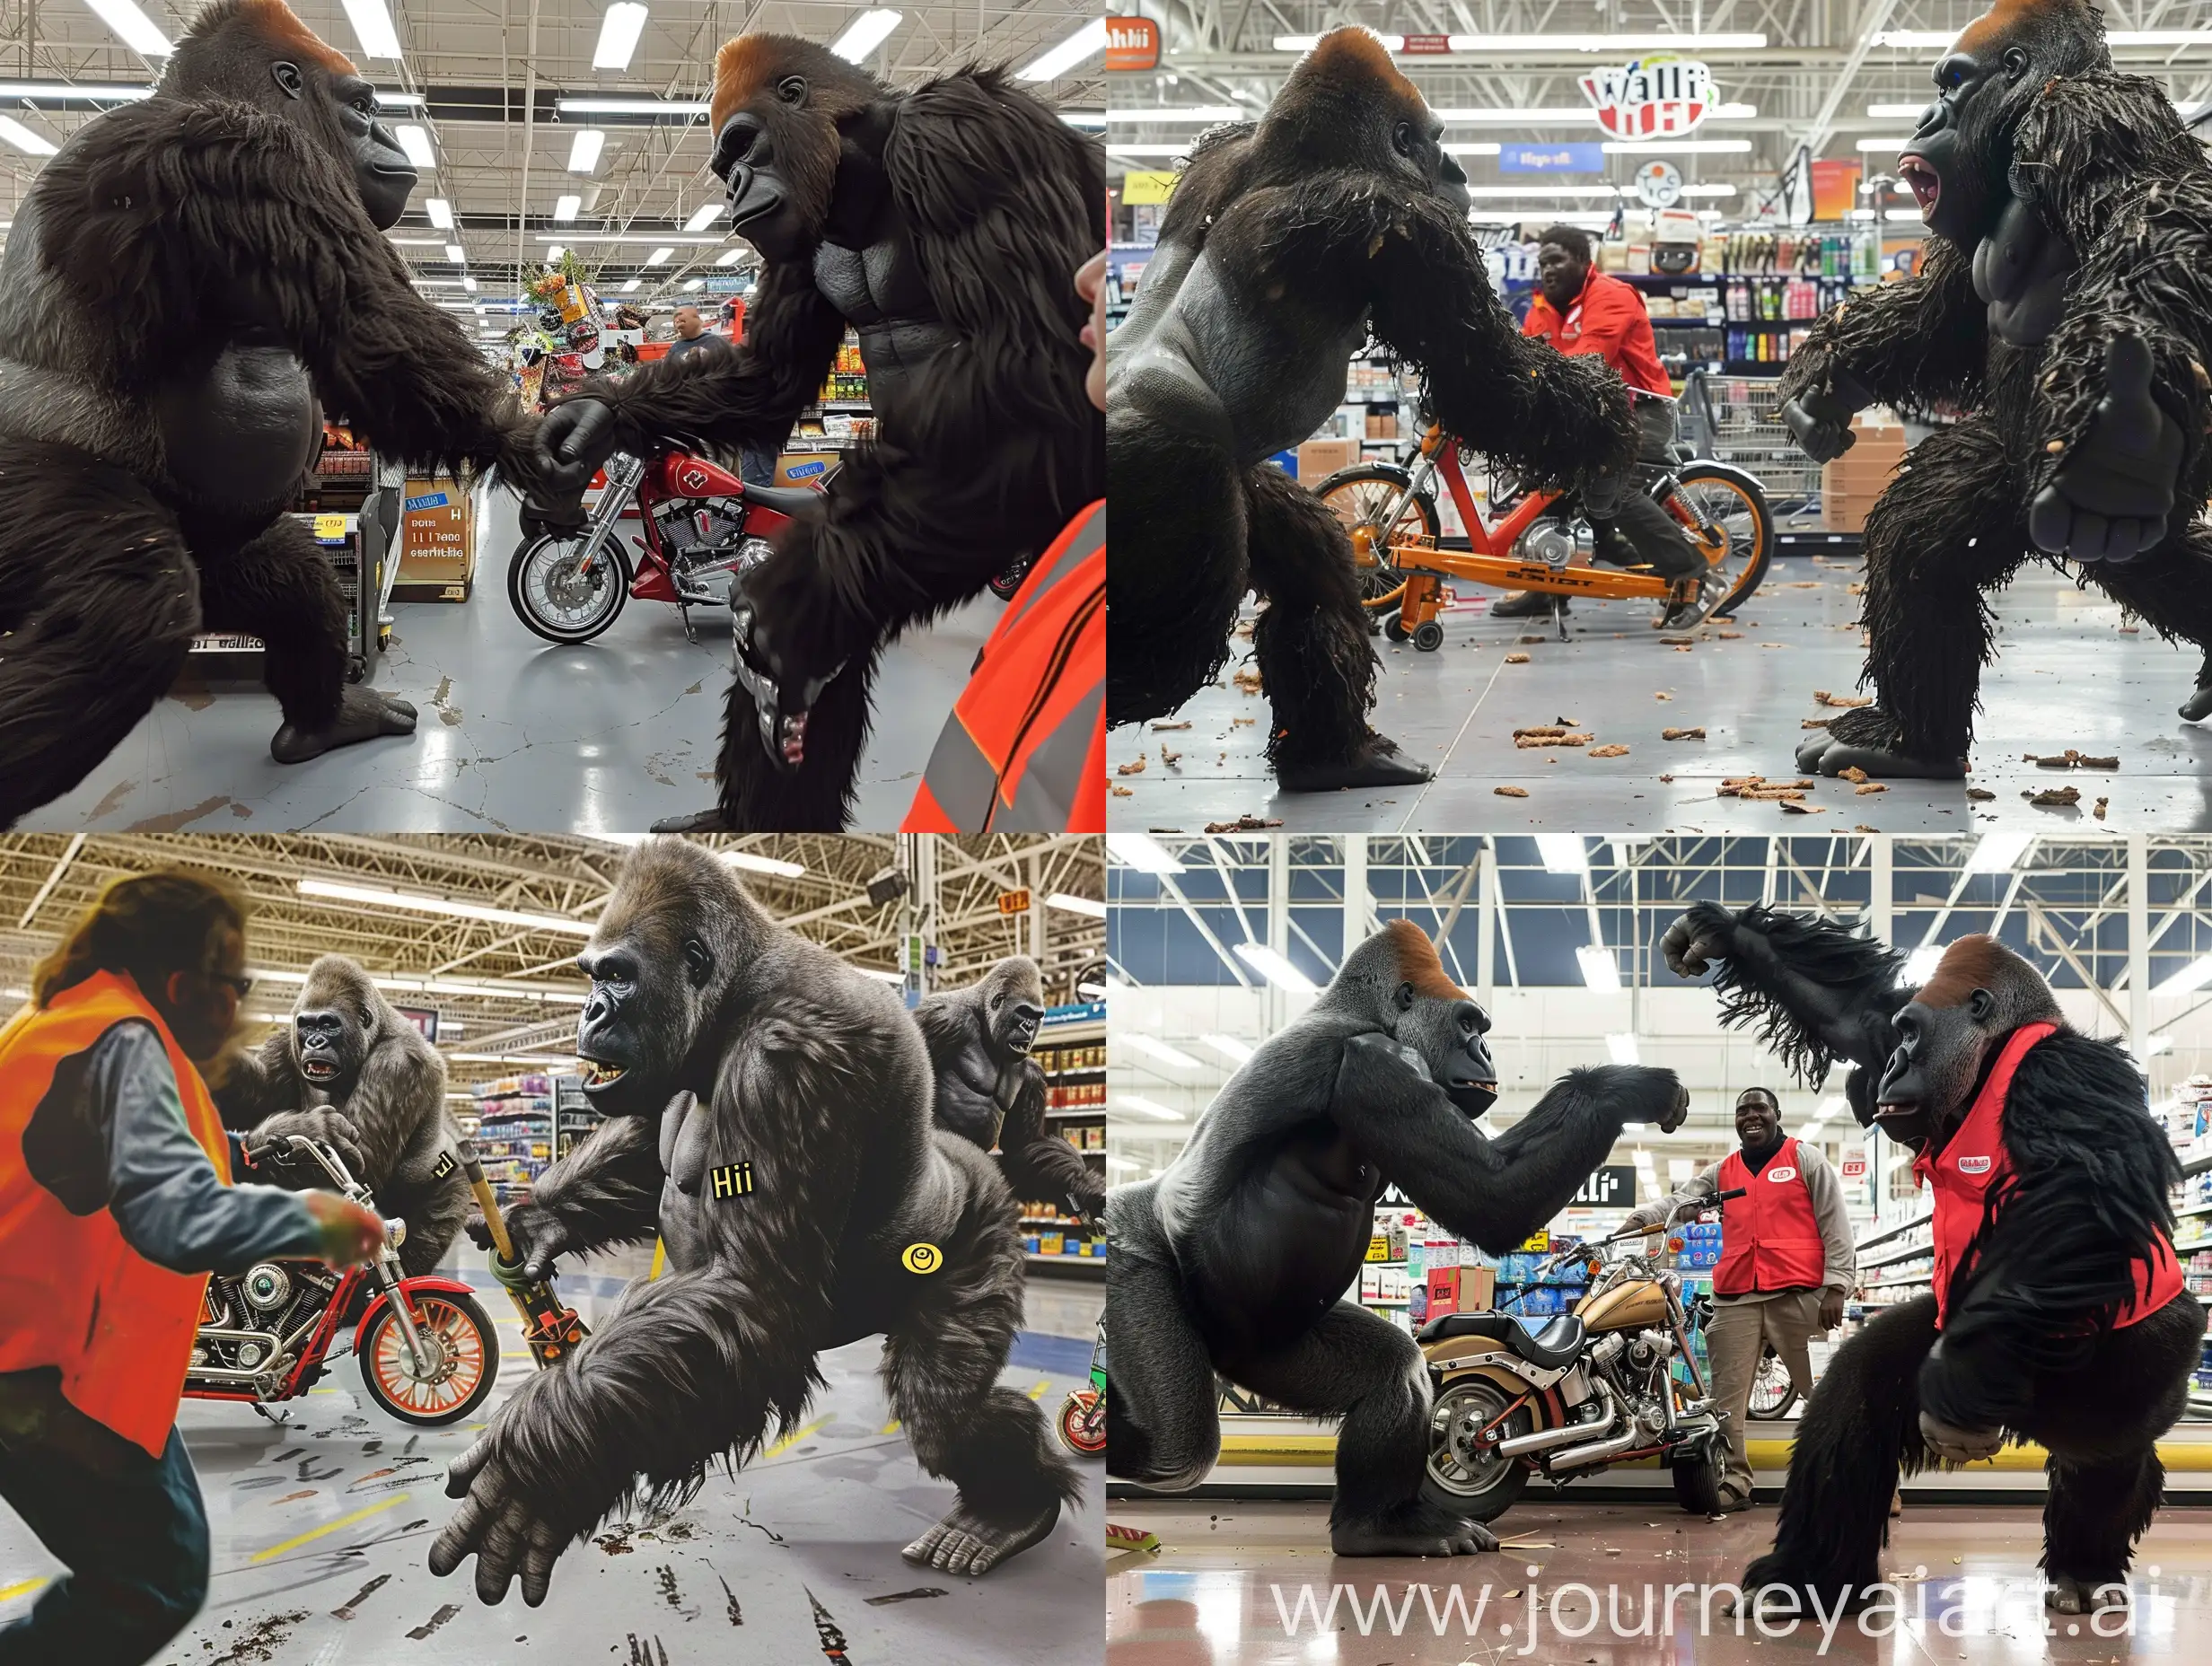 Harried-Walmart-Employee-Escaping-Oversized-Gorillas-with-Junkyard-Scooters